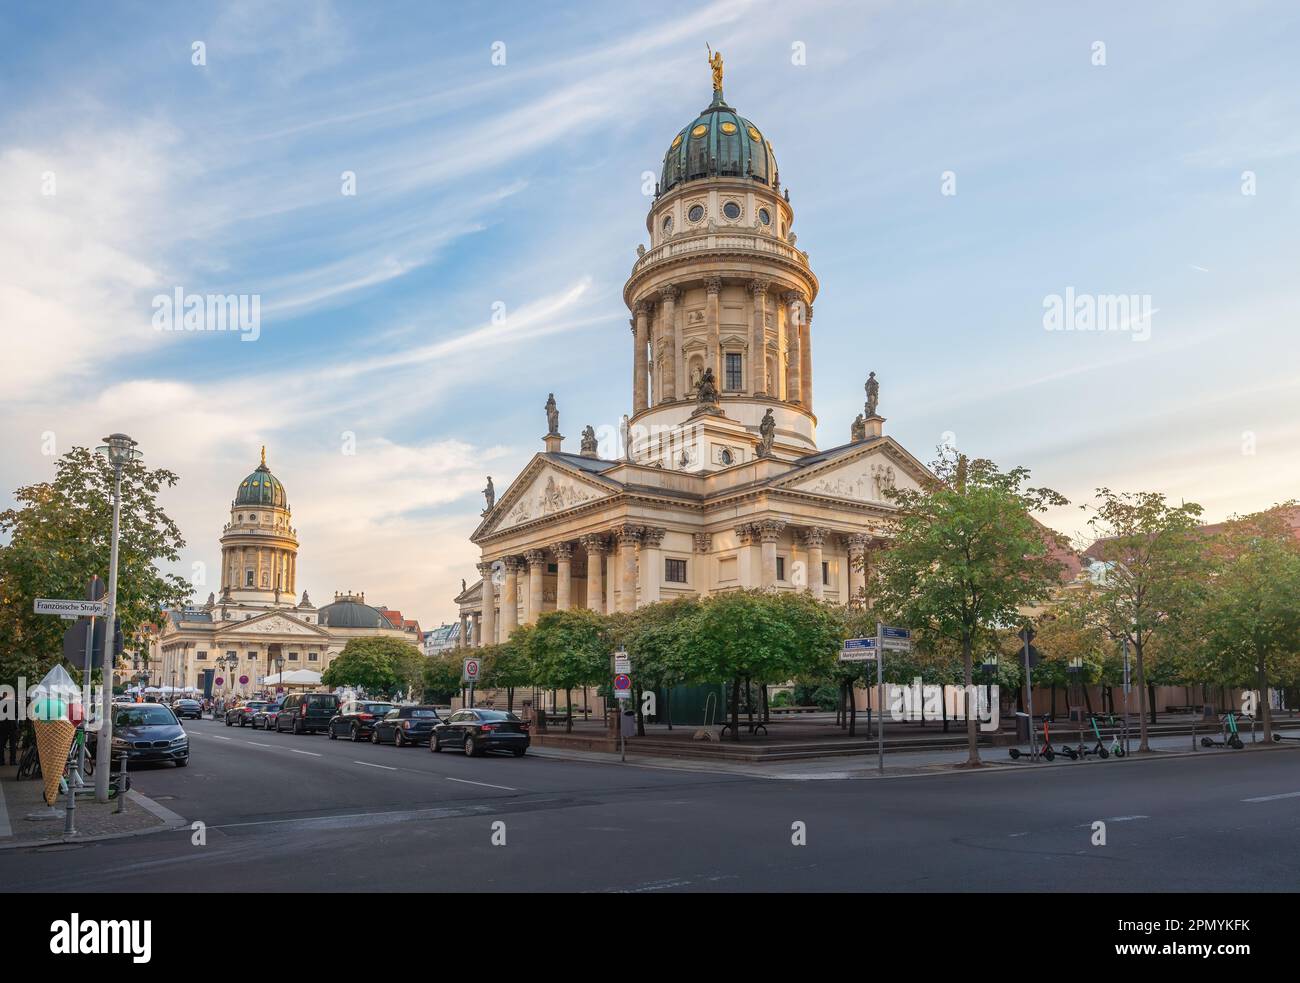 Cattedrali francese e tedesca in Piazza Gendarmenmarkt - Berlino, Germania Foto Stock